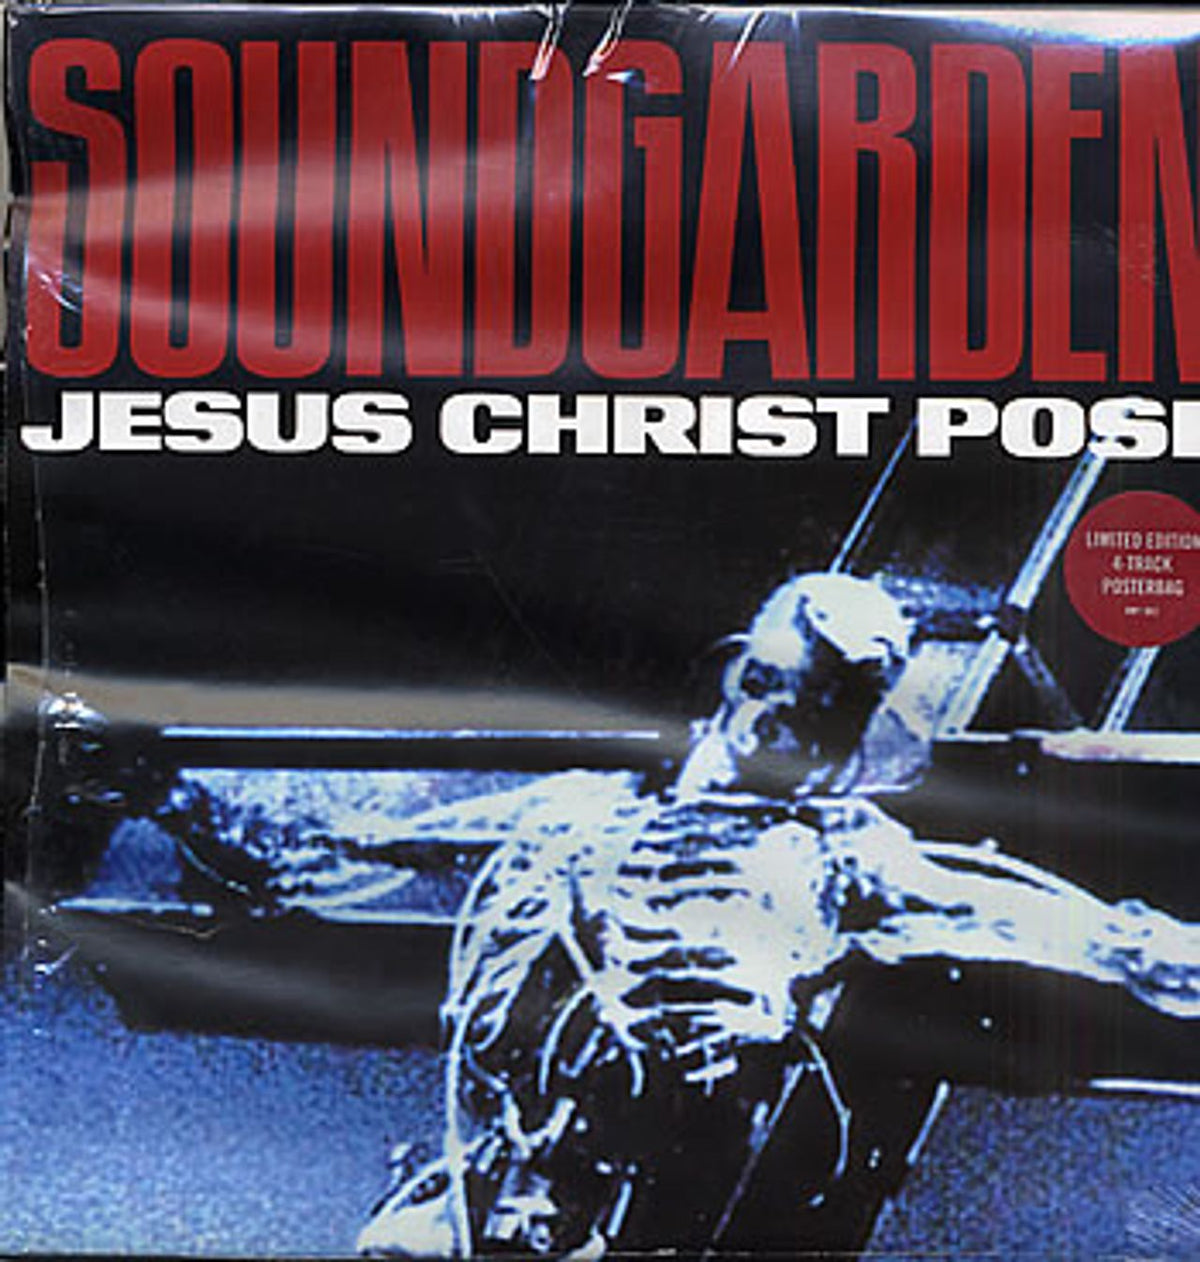 25 Years Ago: Soundgarden – CuffaroPhoto